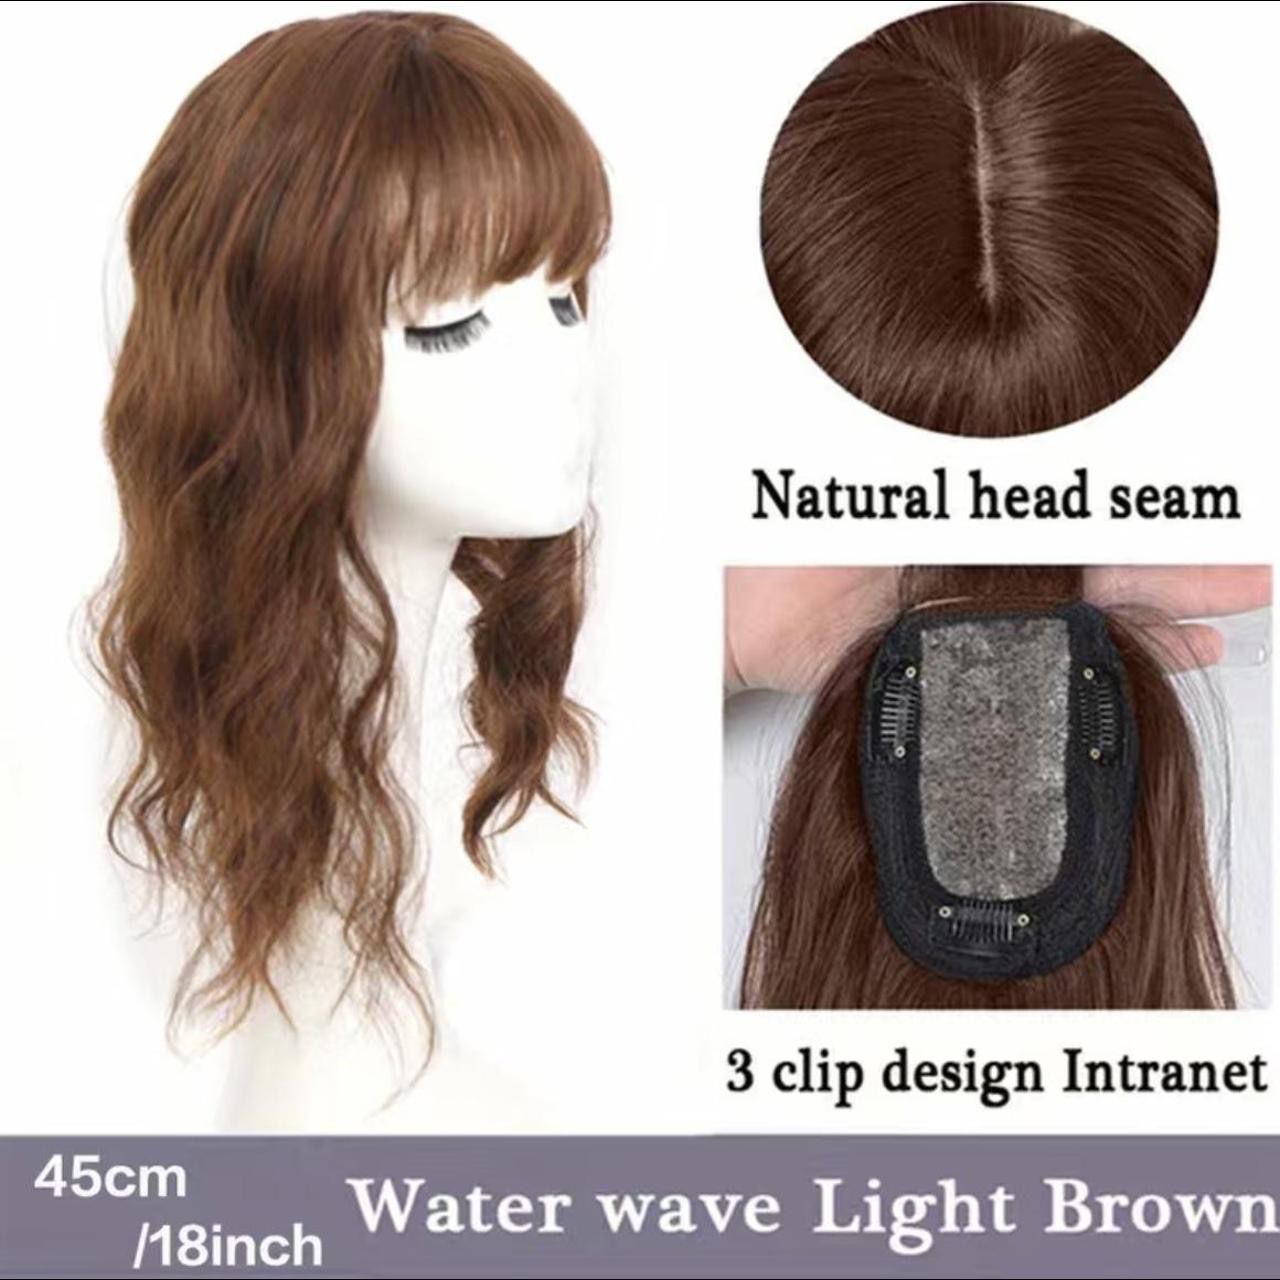 Human hair blend brown topper extension.